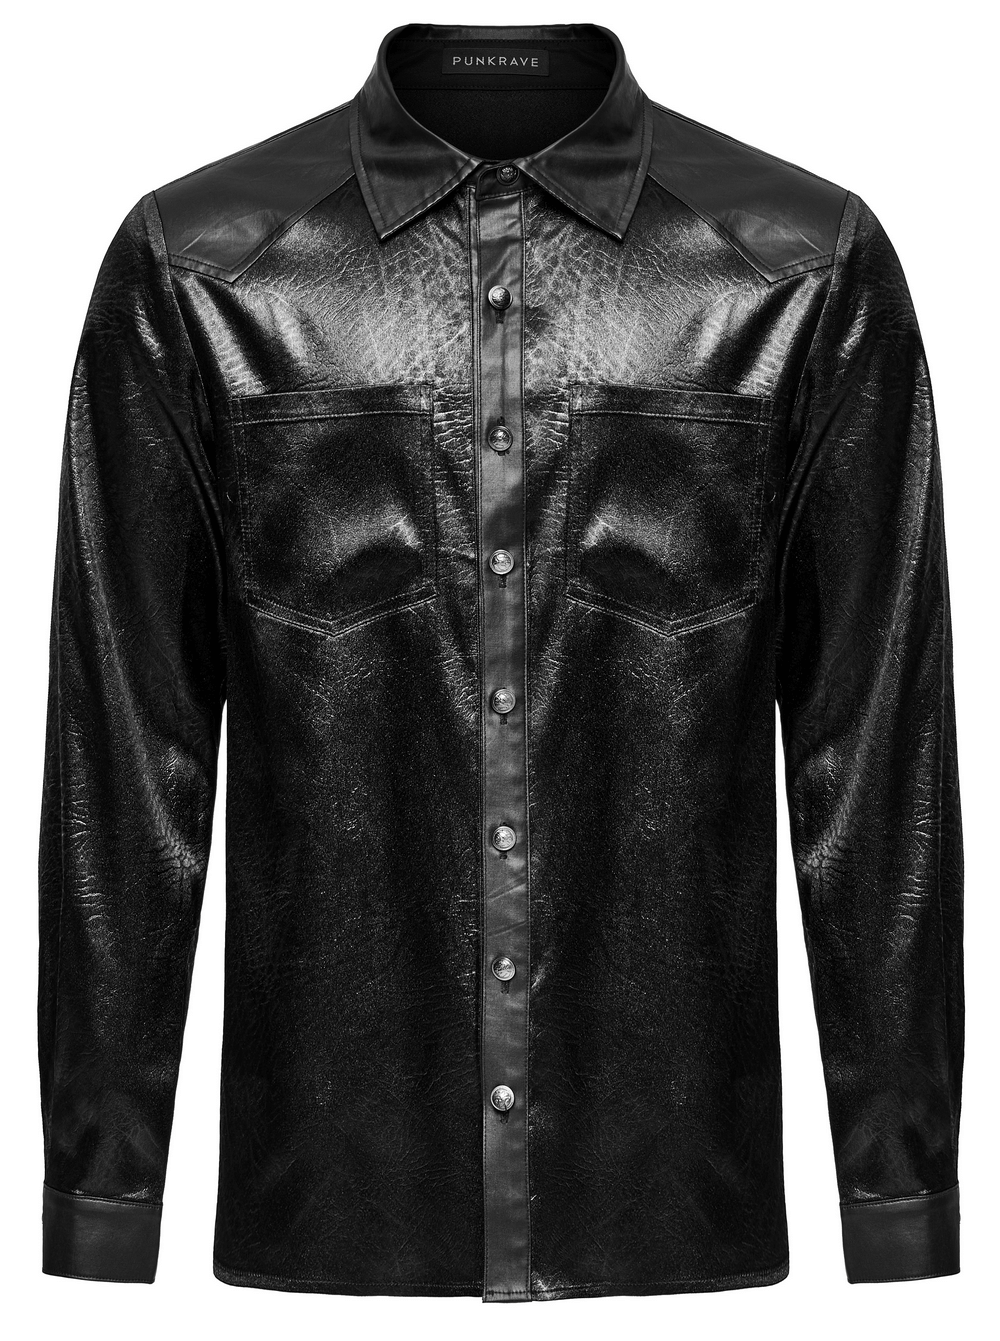 Alternative Black Shirt with Splicing Design for Men